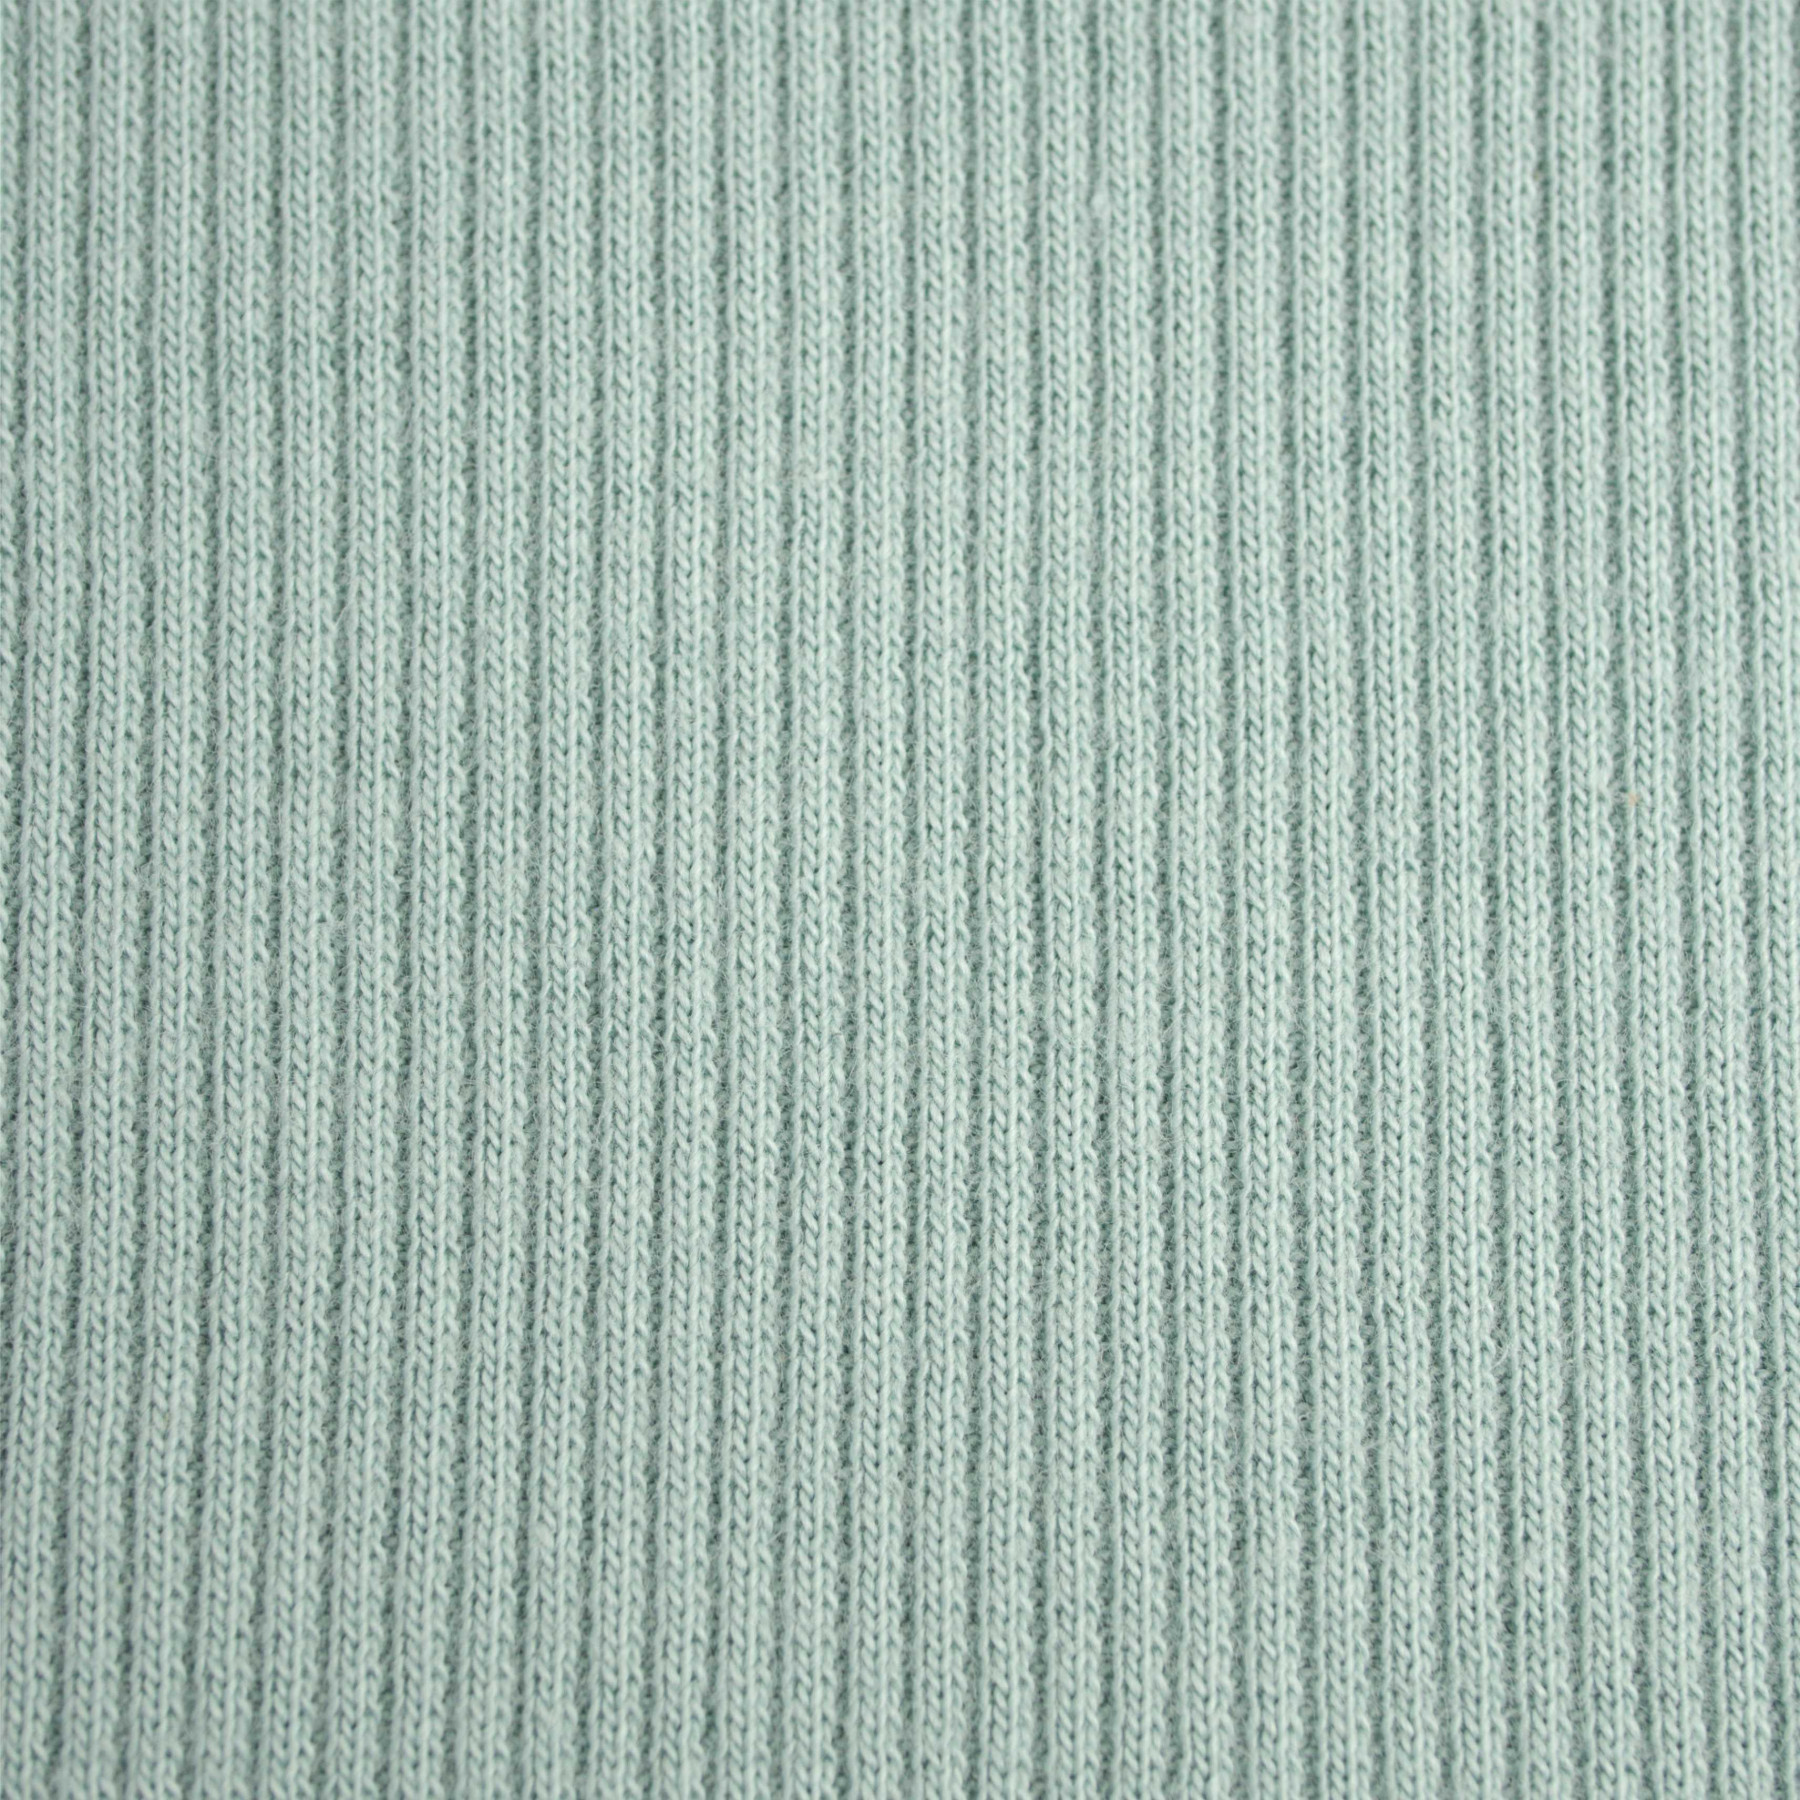 D-174 MODERN MINT - Ribbed knit fabric